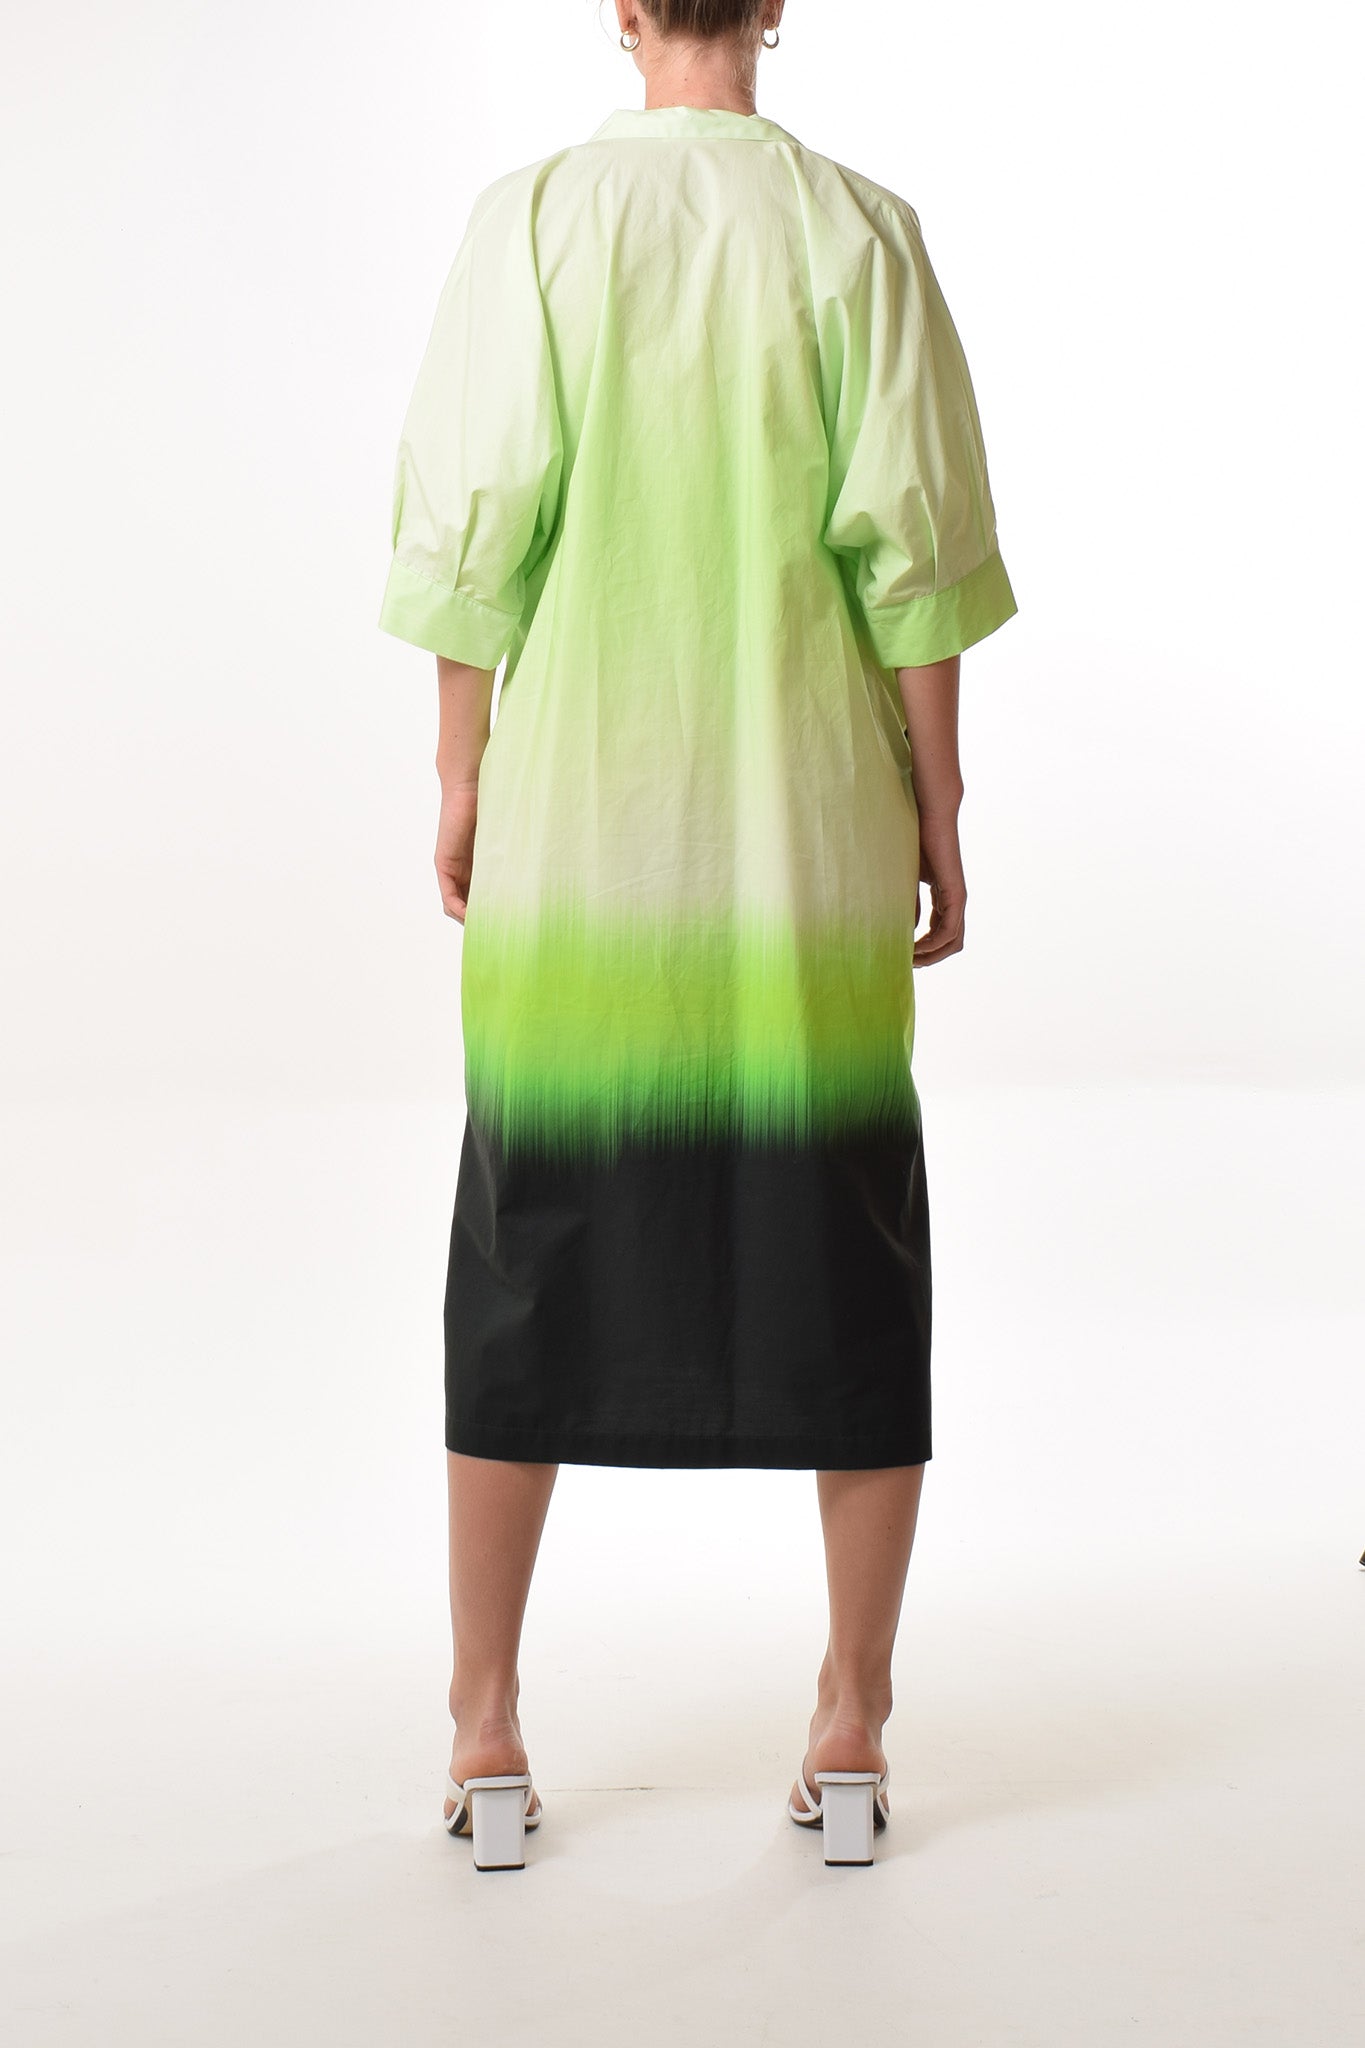 Tavira dress in Green (Lecil print cotton)